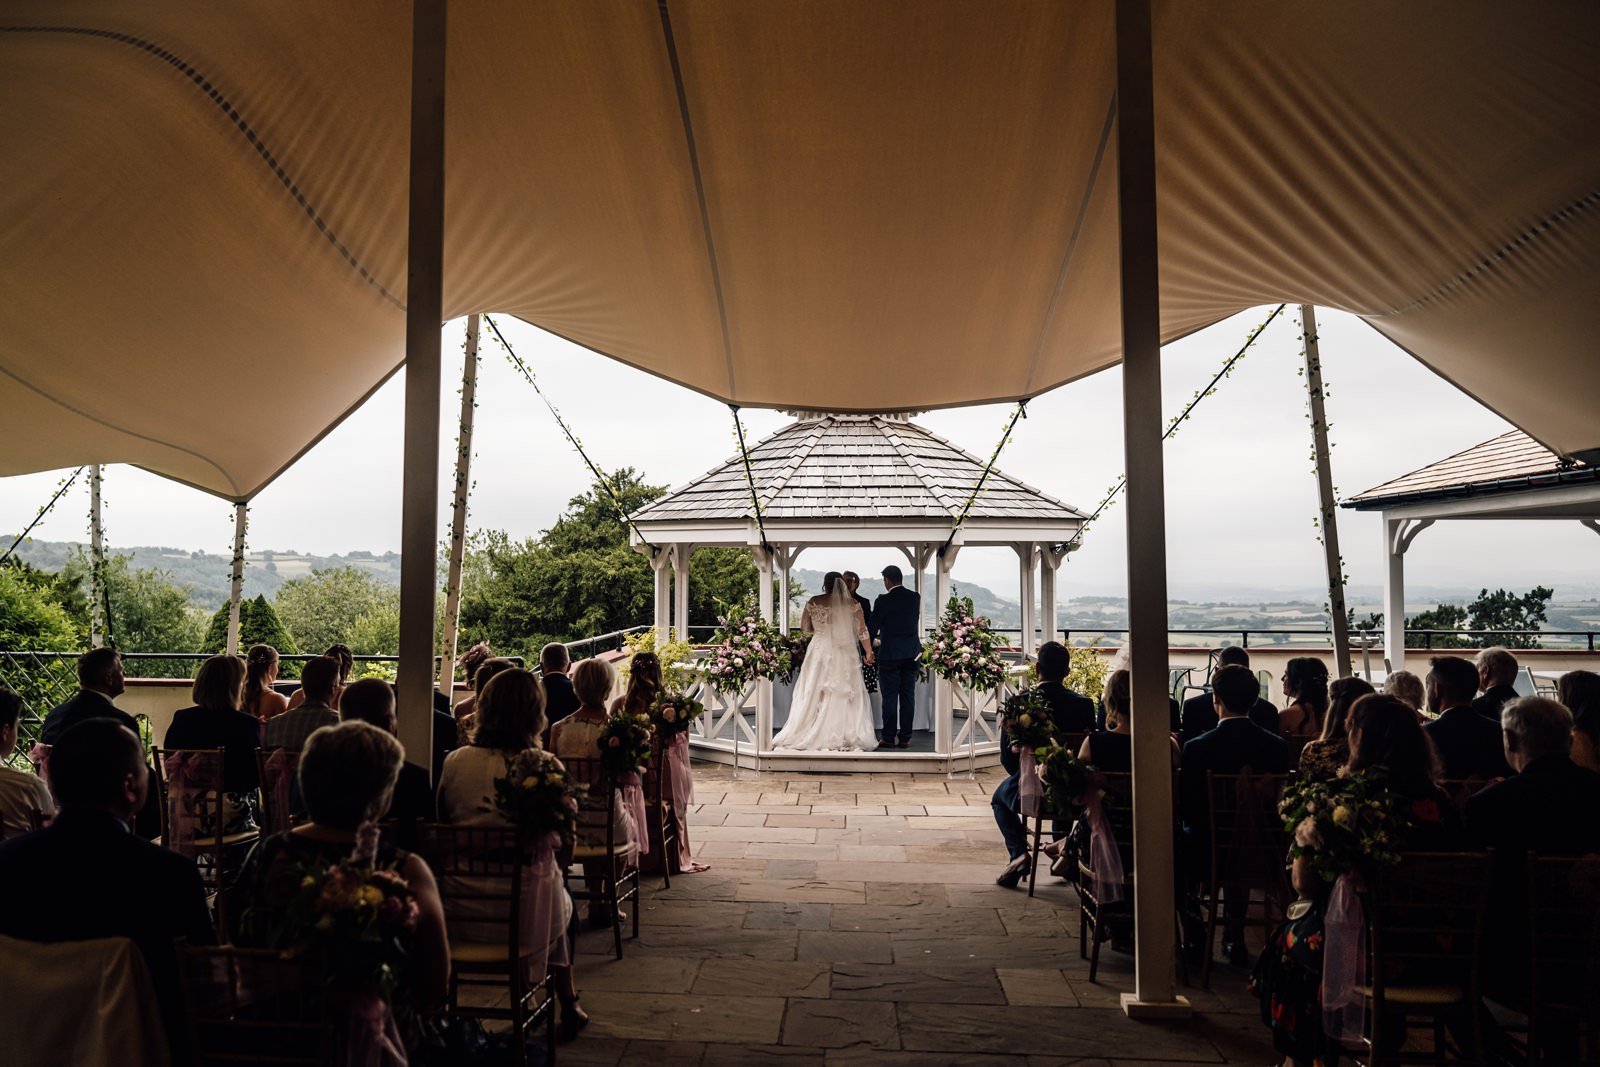 Outdoor wedding ceremony at Caer Llan, South Wales